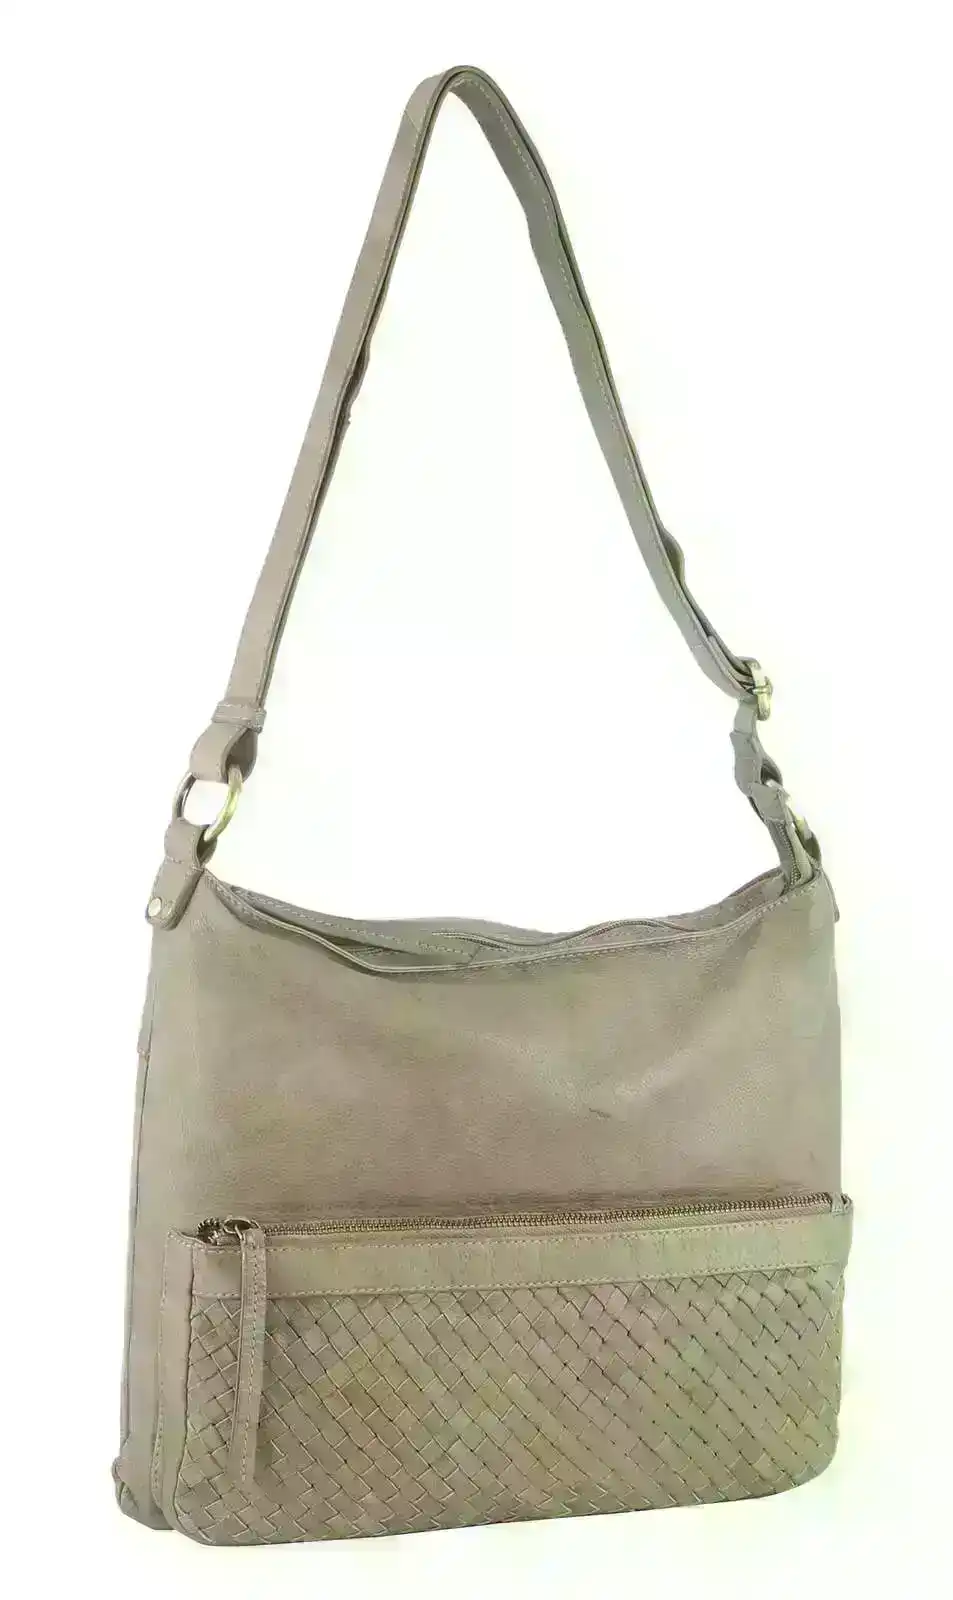 Pierre Cardin Woven Leather Ladies Cross-Body Bag Handbag - Taupe